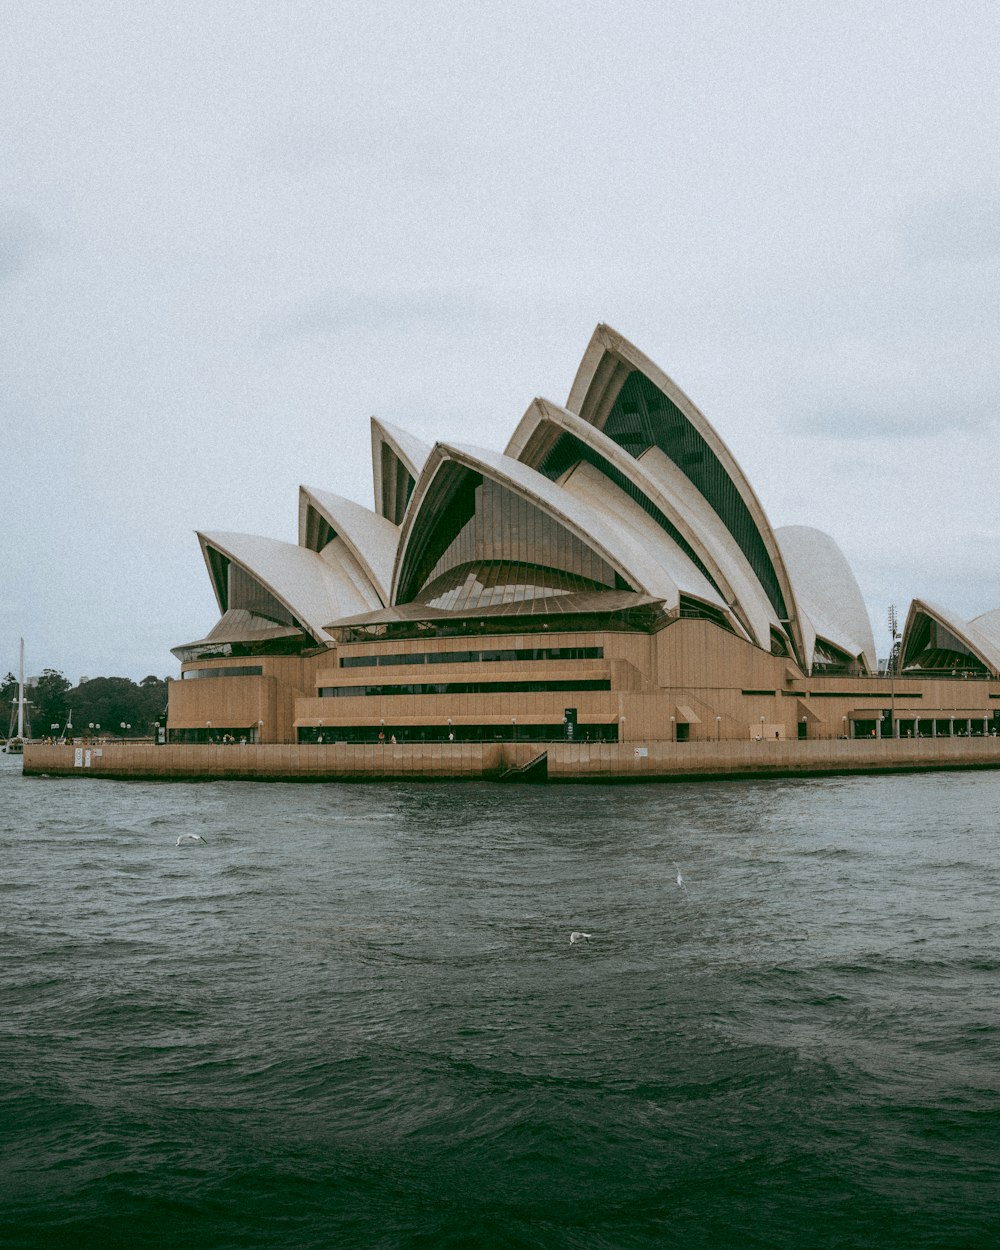 sydney opera house in australia